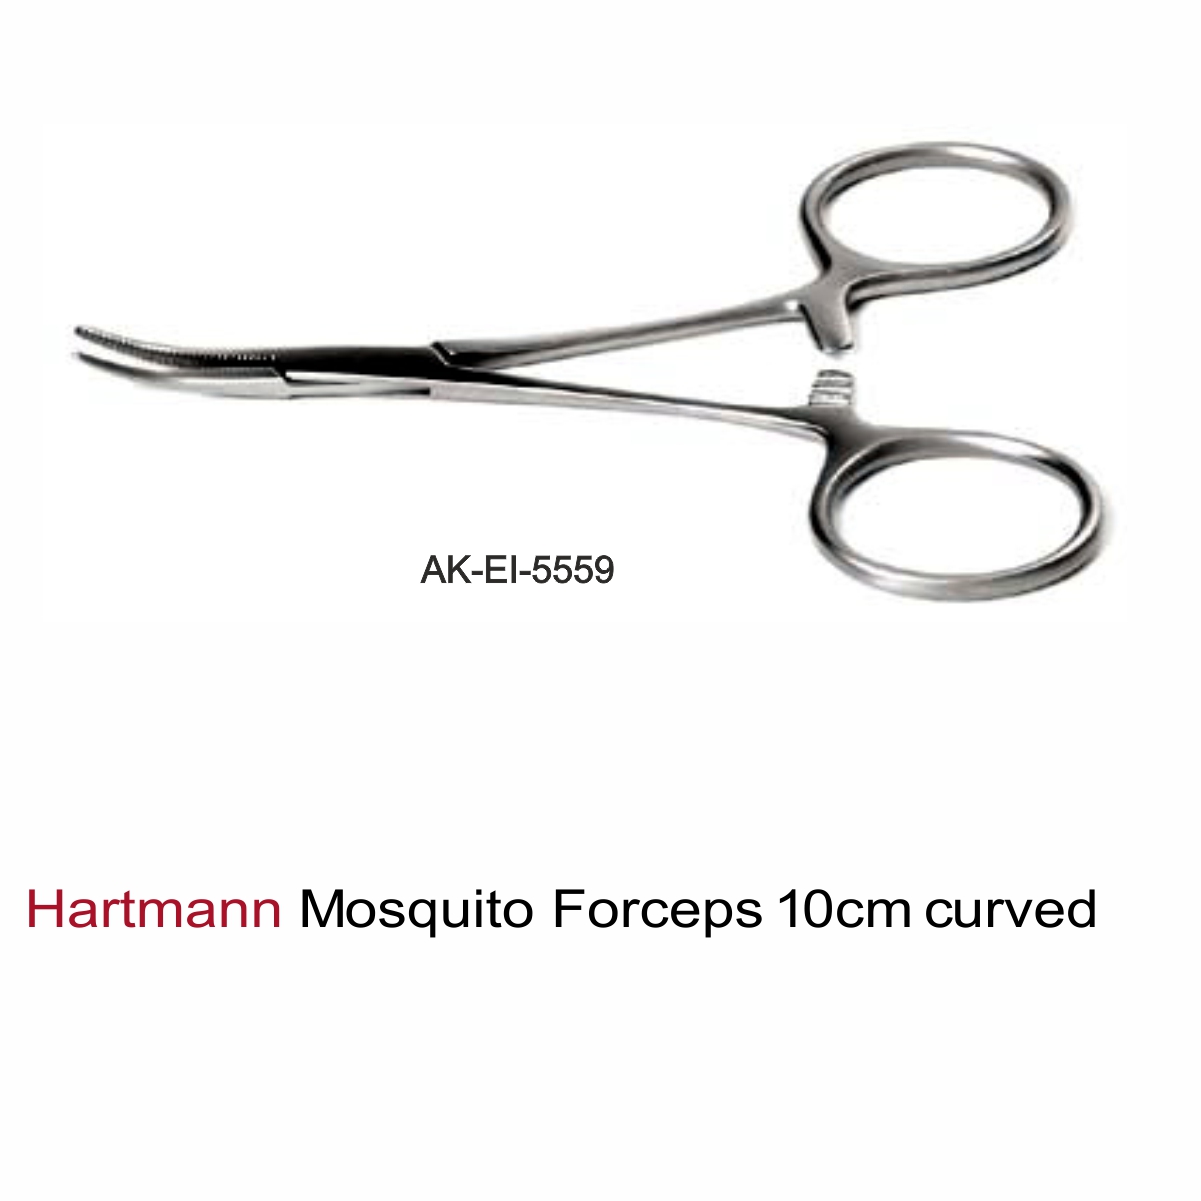 Hartmann Mosquito Forceps